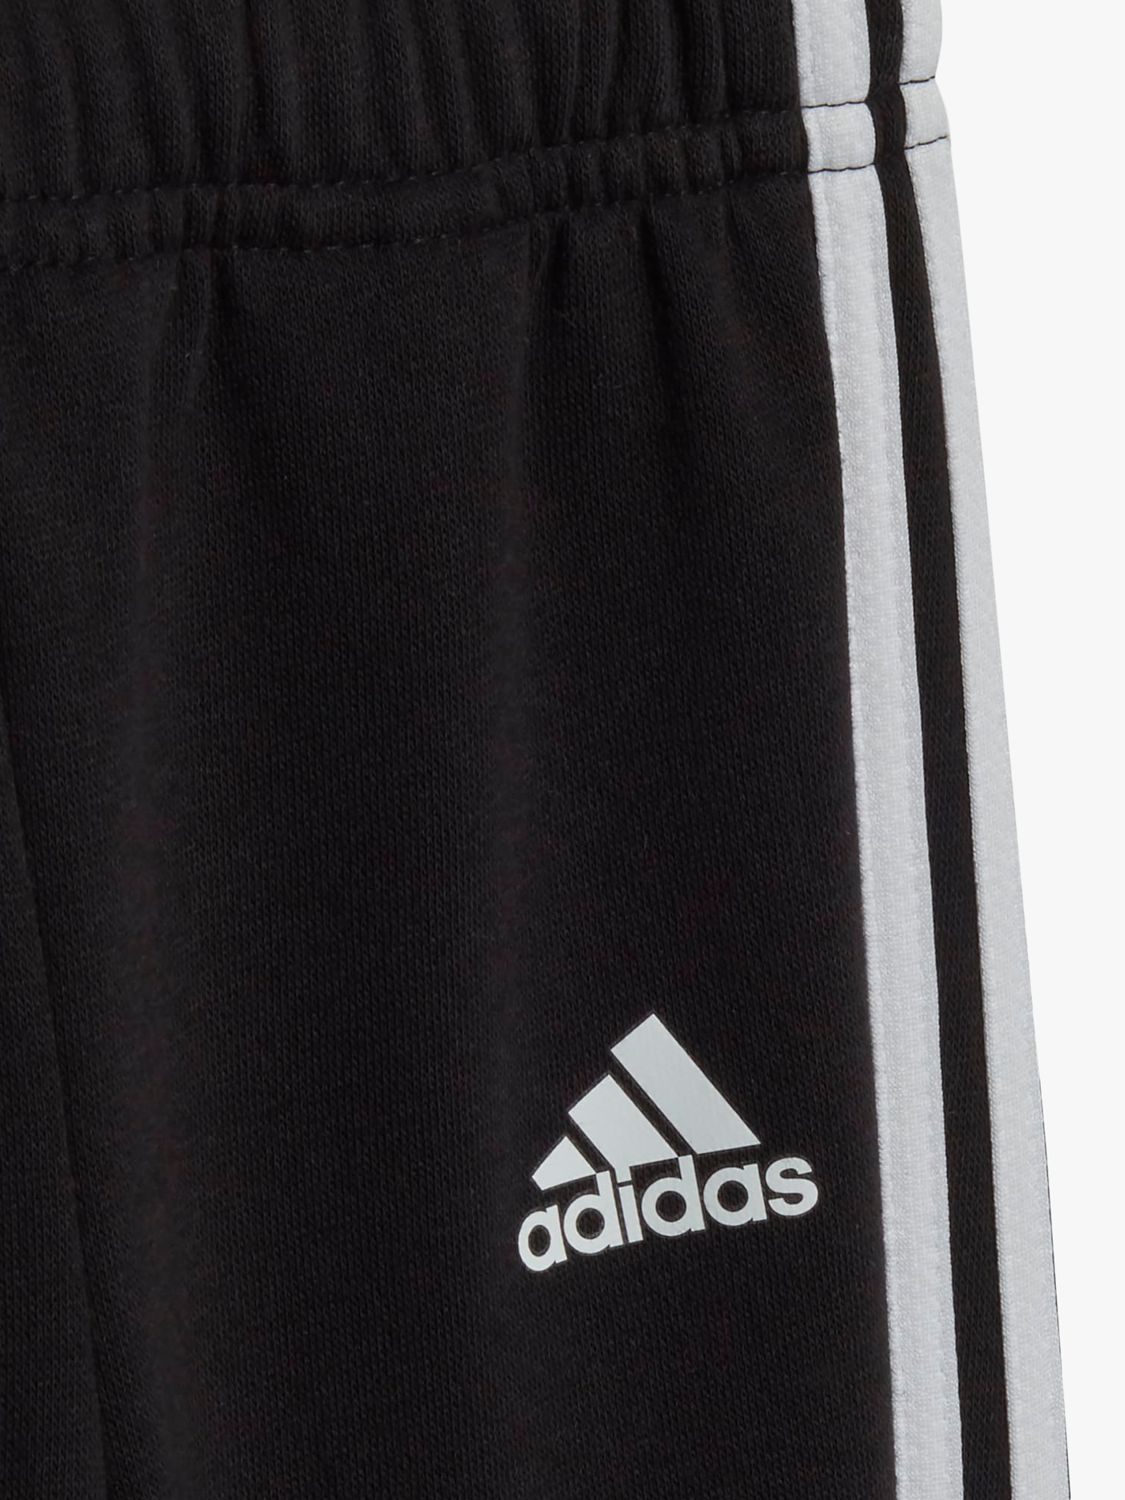 adidas Baby Essentials Three Stripes Full Zip Hoodie & Joggers Set, Black/White, 2-3 years